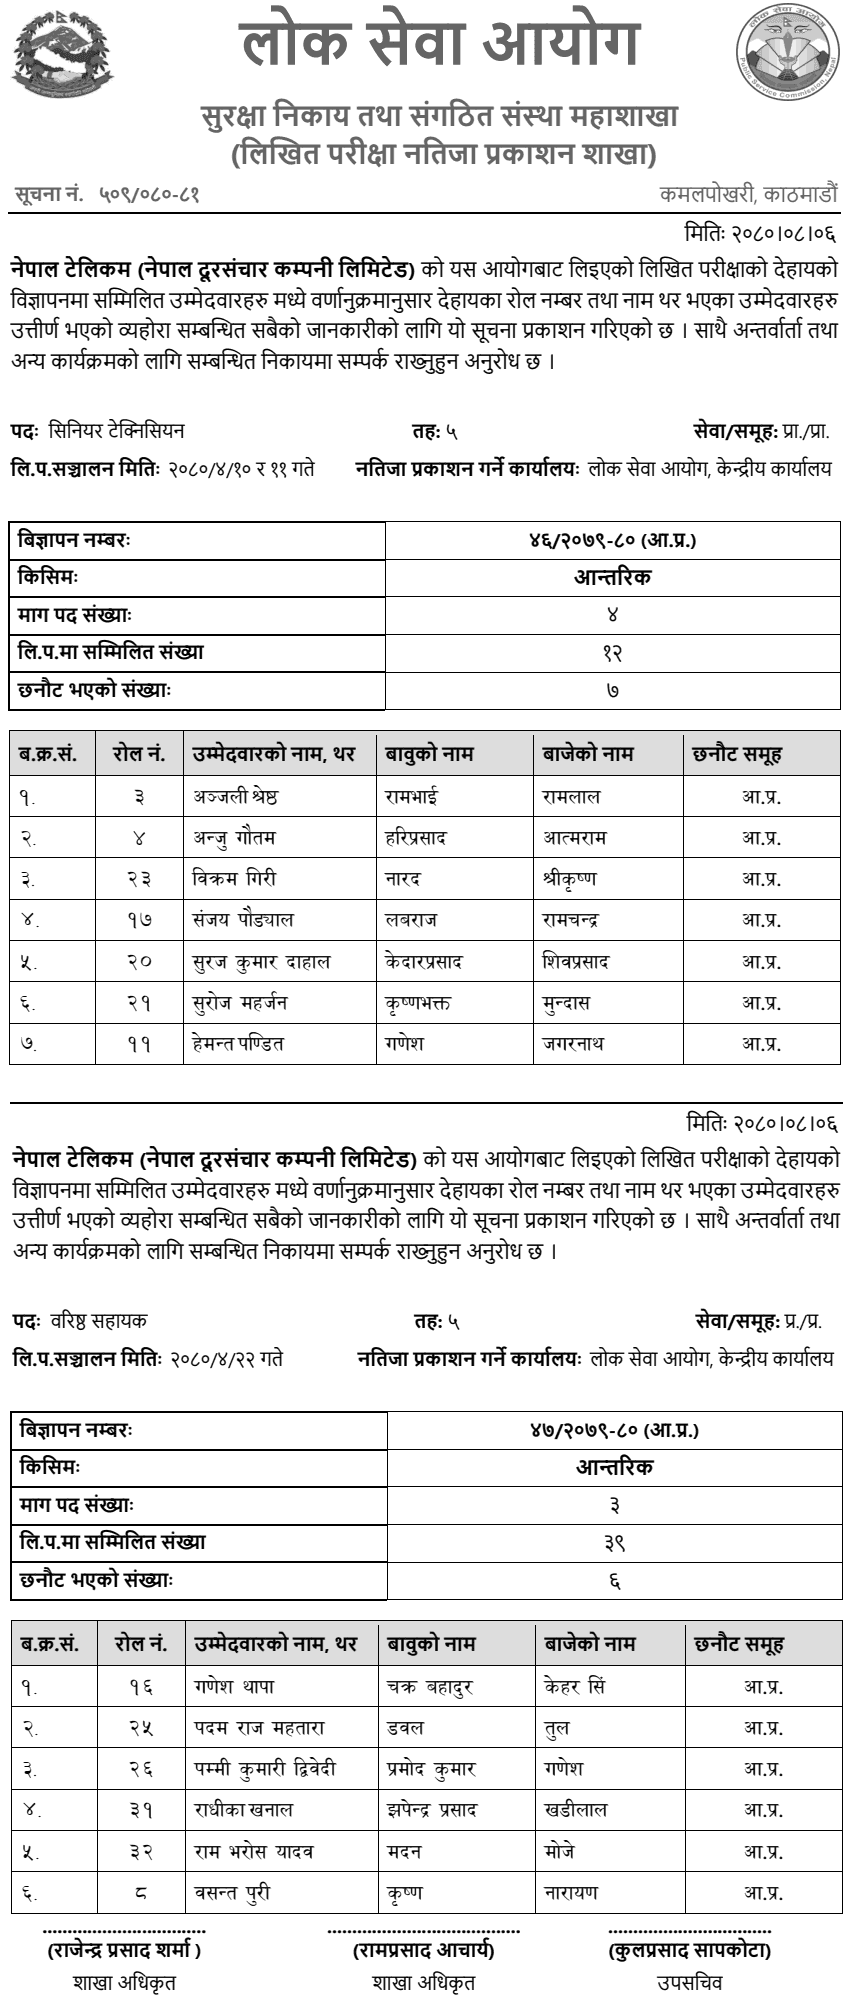 Nepal Telecom Written Exam Result of 5th Level (Internal) 2080